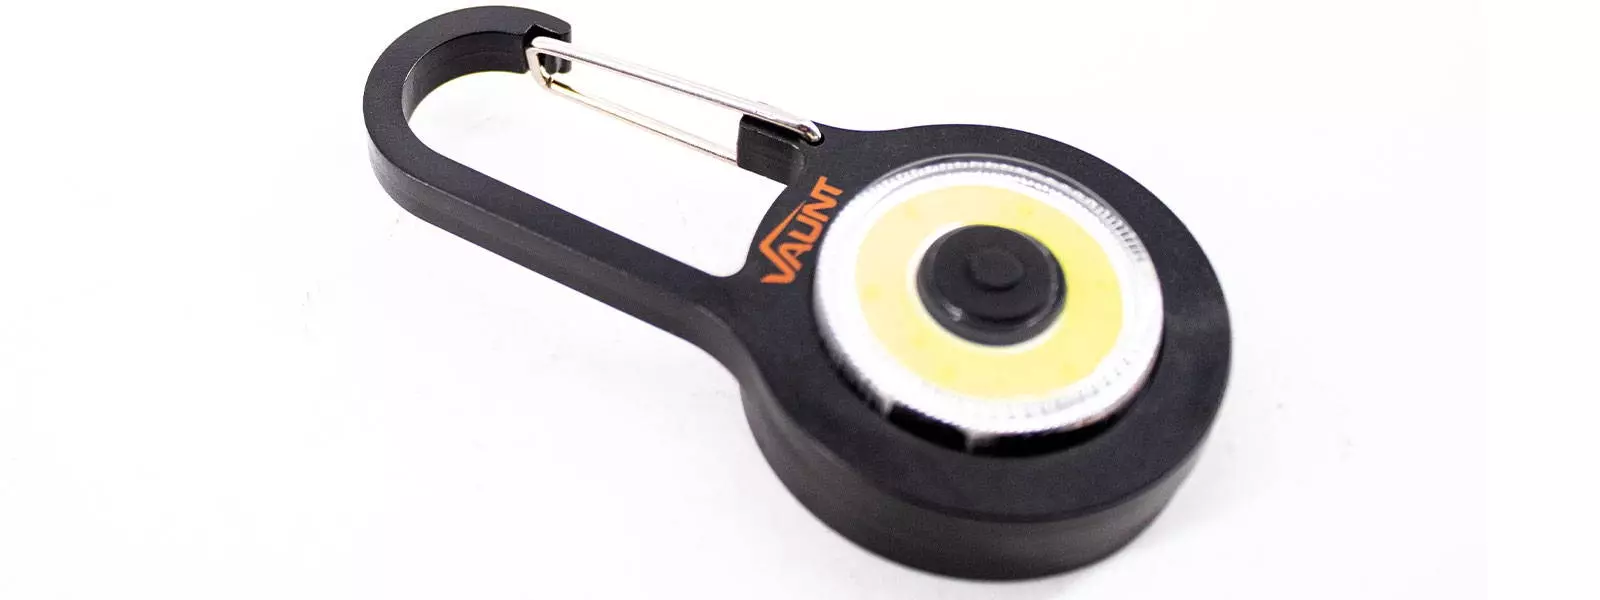 Vaunt Essentials Carabiner Spotlight